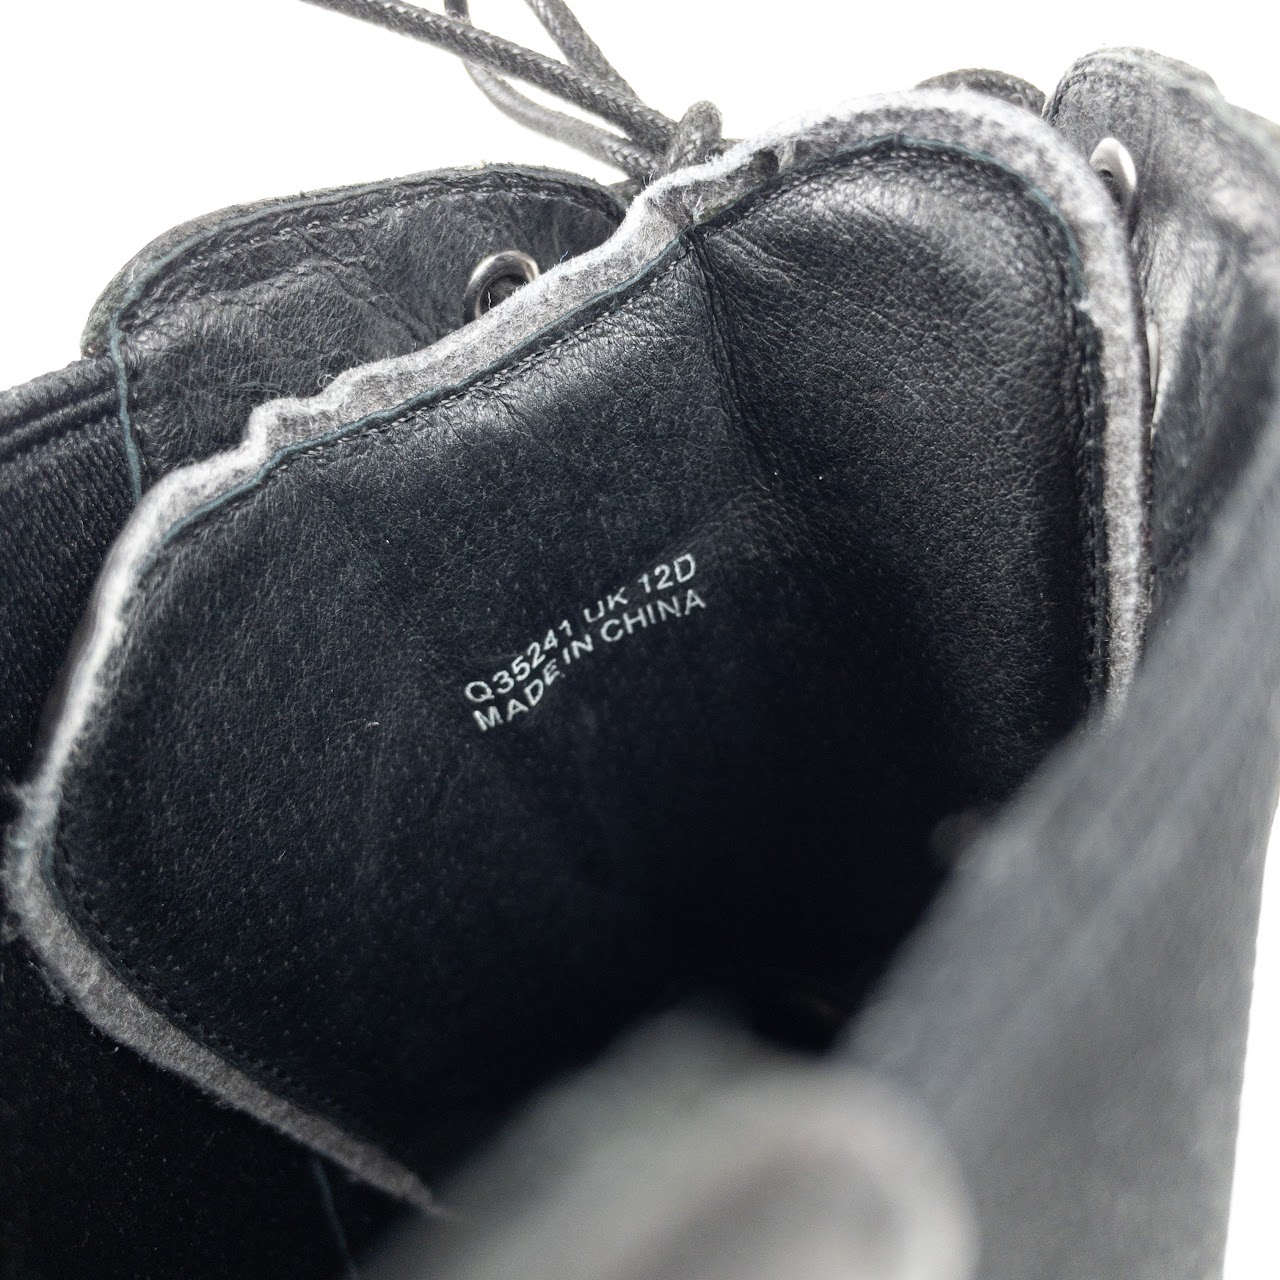 Yohji Yamamoto Y-3 Leather Lace-Up Boots